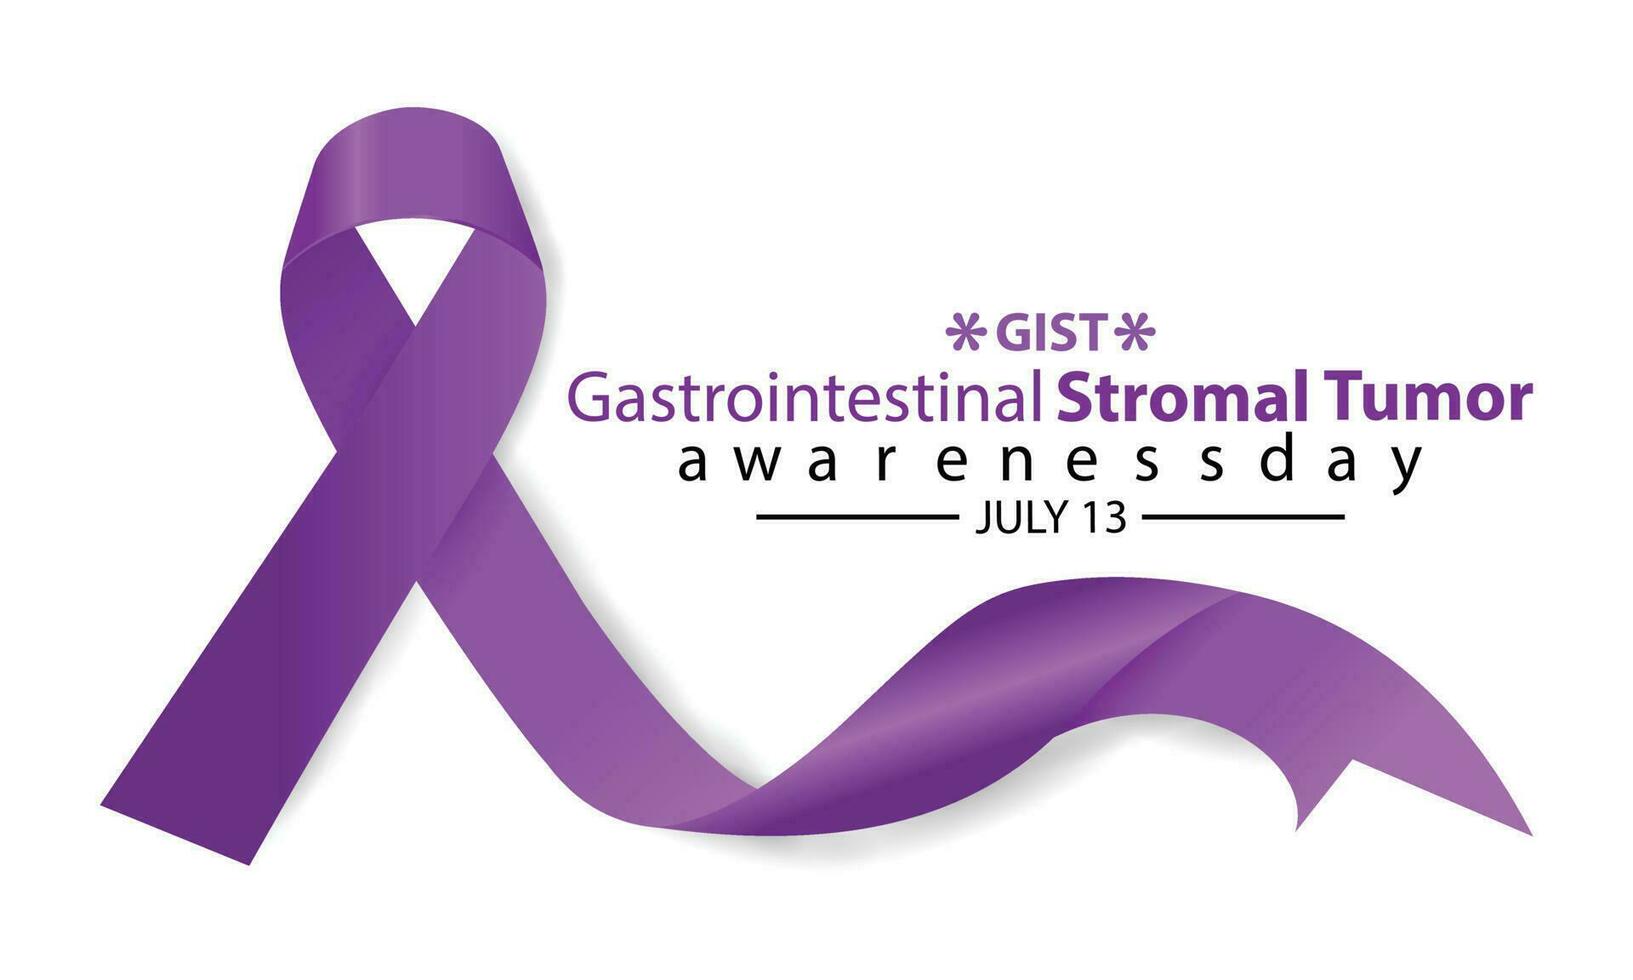 Gastrointestinal Stromal Tumor GIST awareness day in July 13. Lavender or violet color ribbon. Vector illustration.